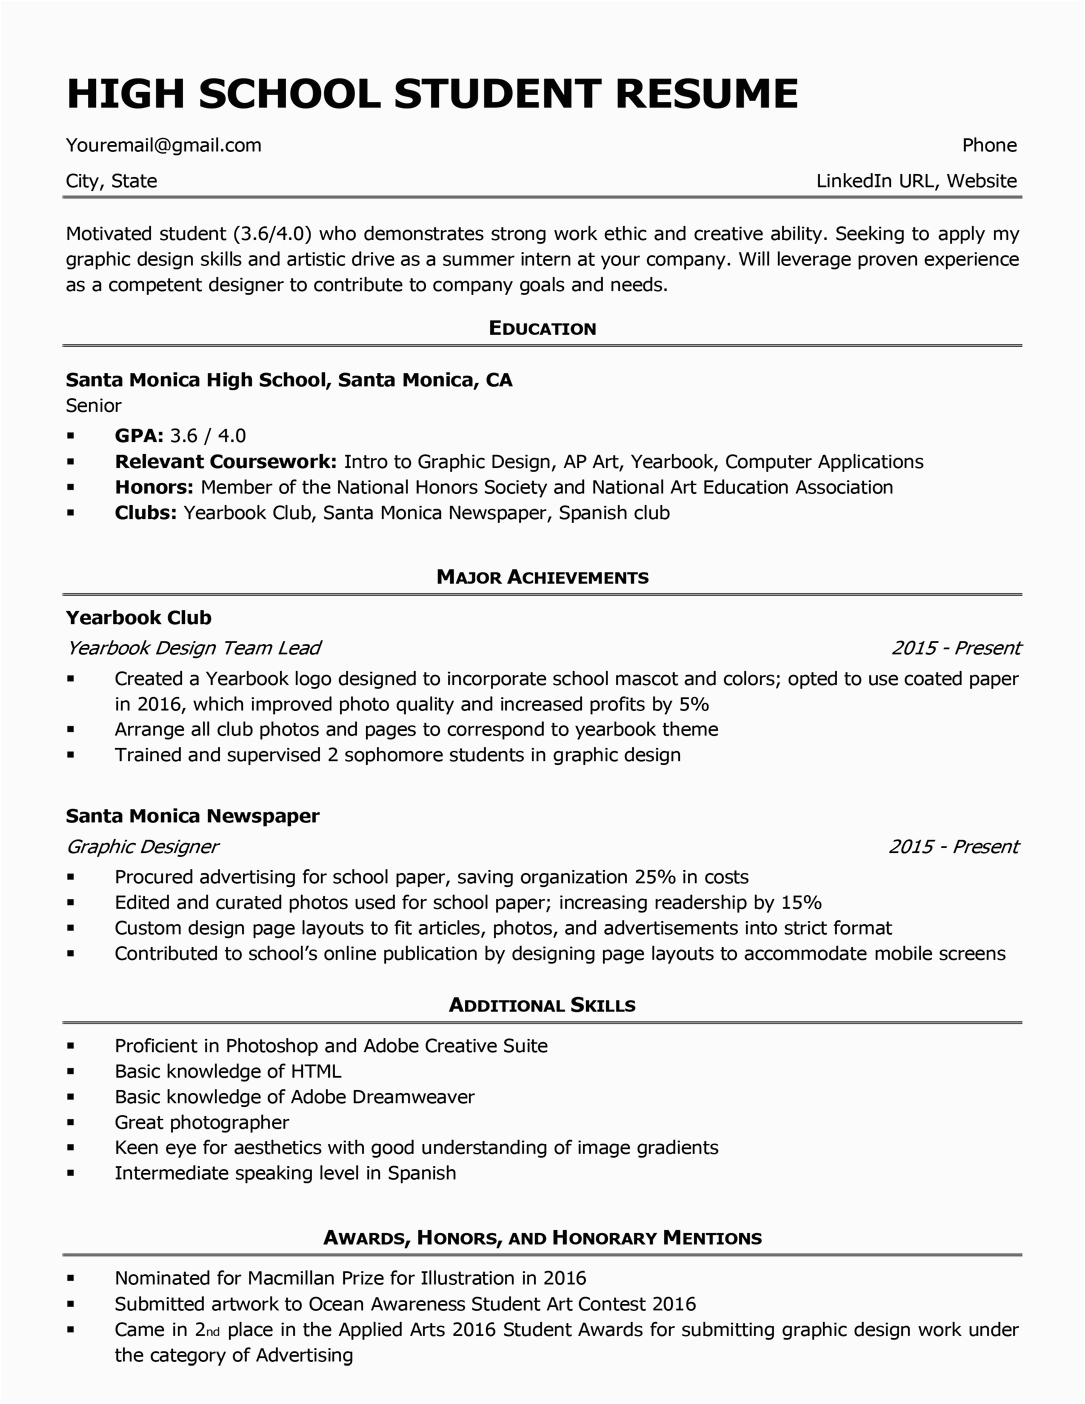 Sample Resume for High School Student Seeking Internship Beginner College Student Resume format for Internship